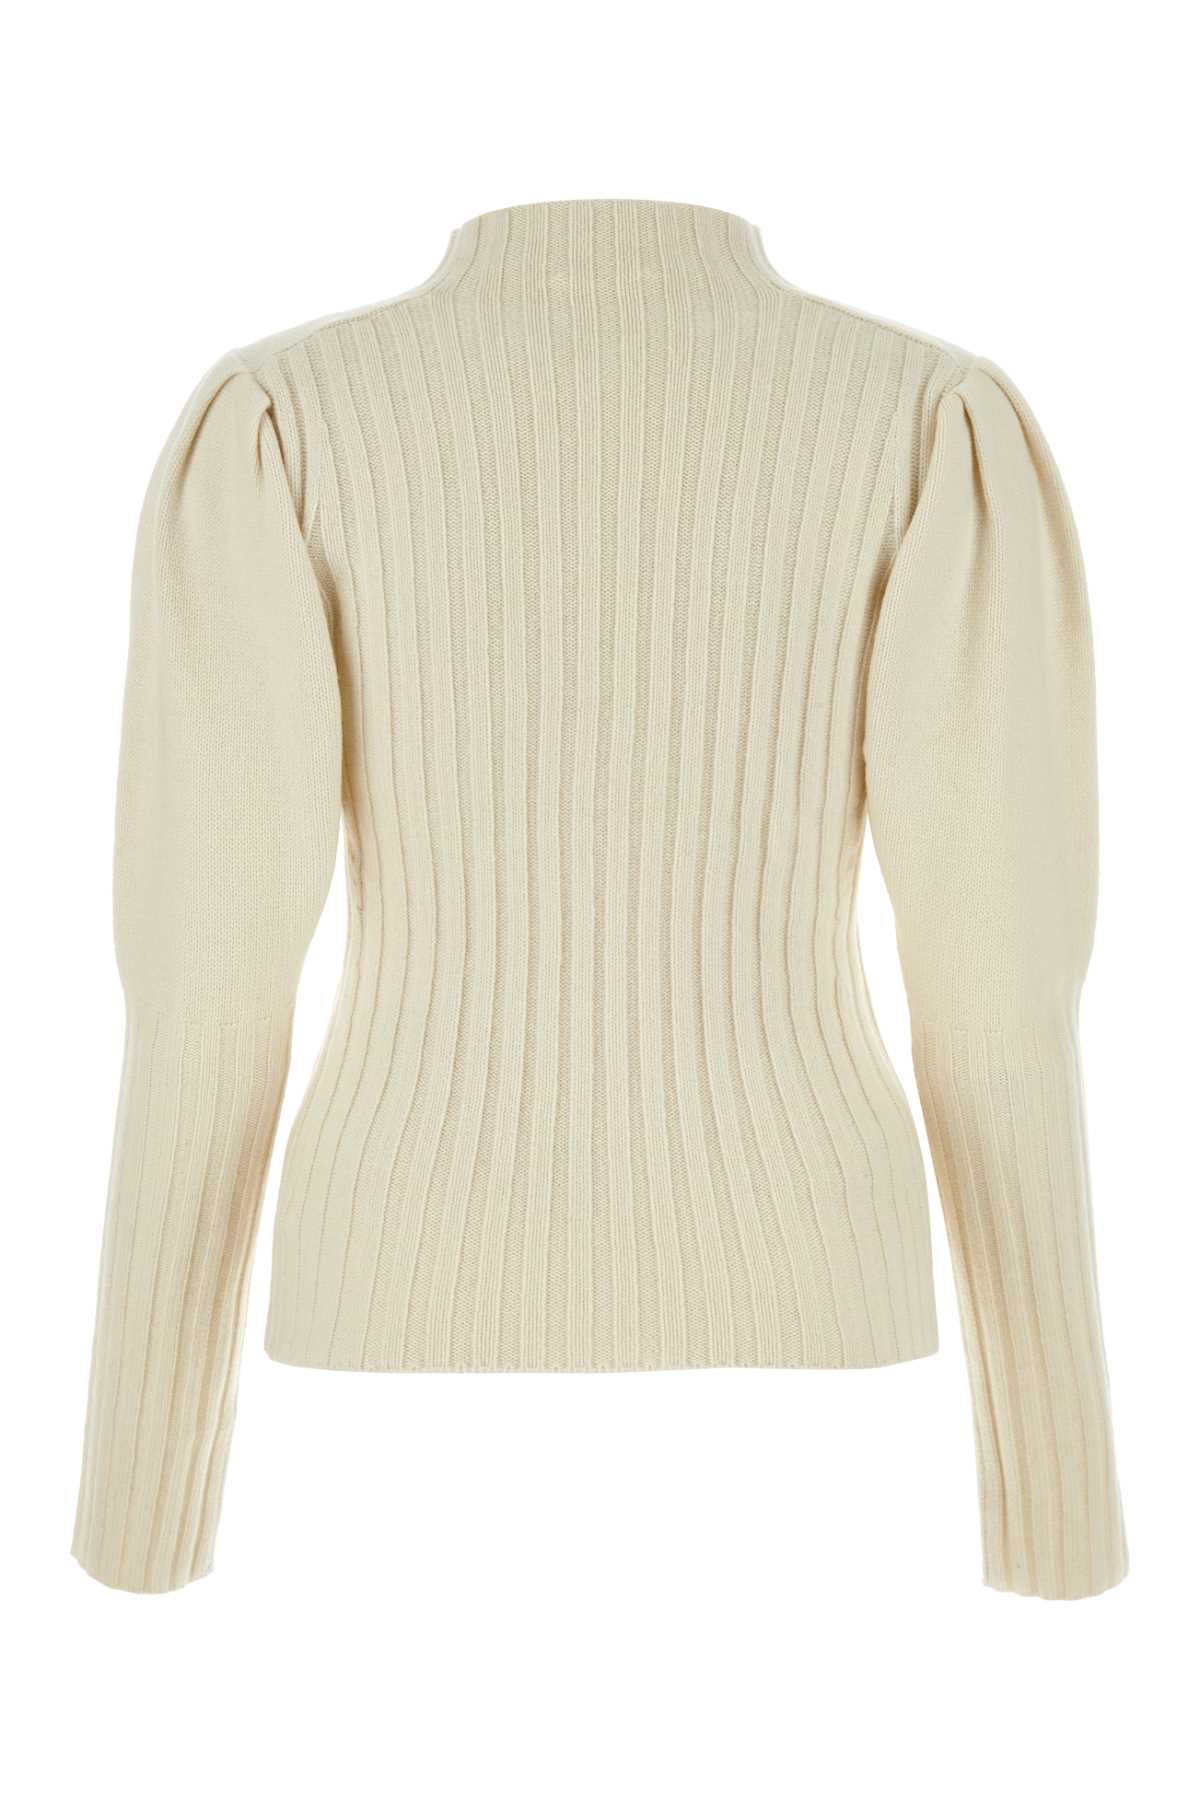 Chloé Ivory Cashmere Sweater In Whitepowder